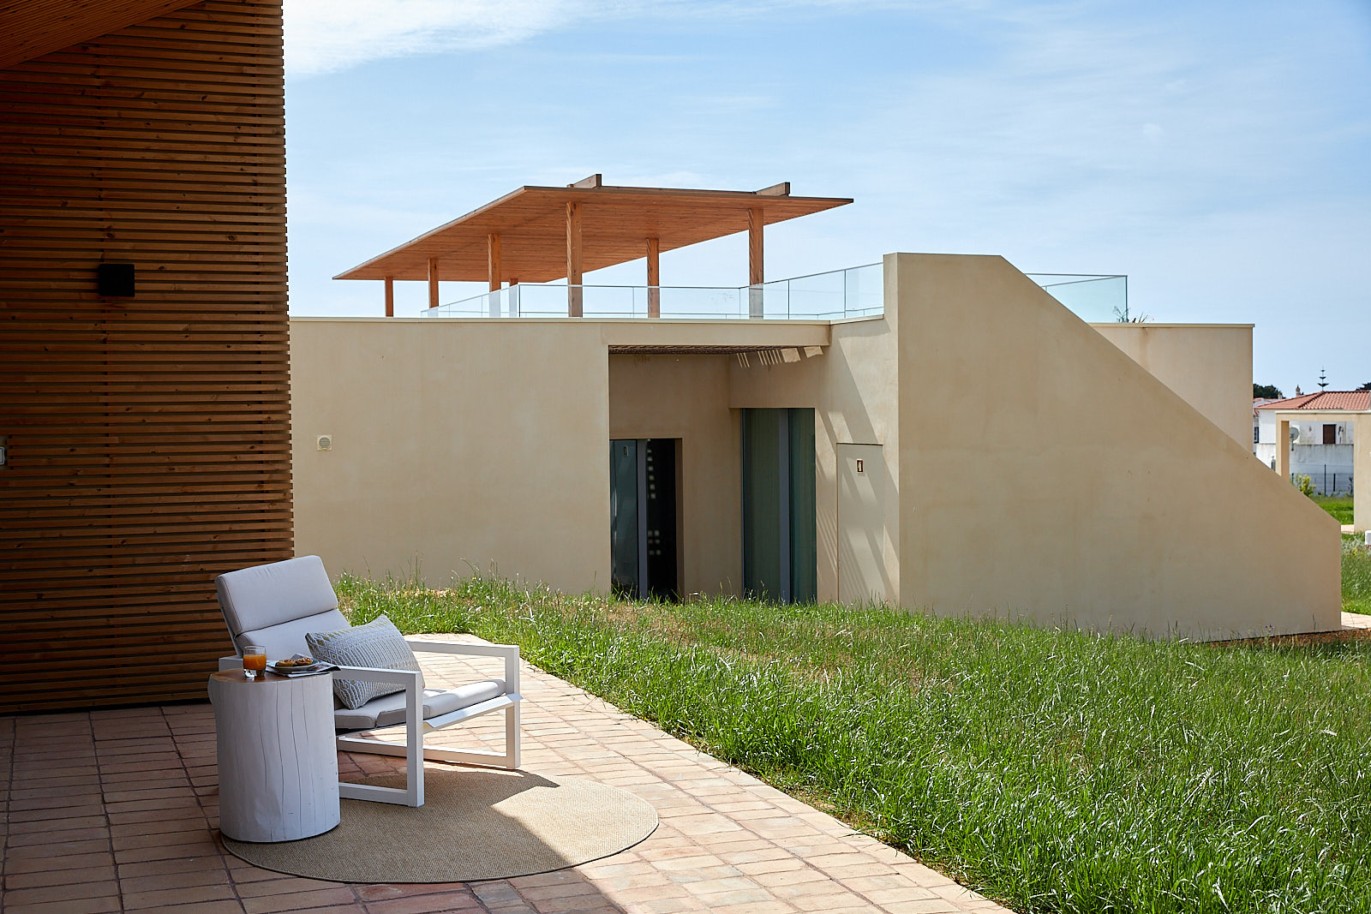 2 bedroom apartment in resort, for sale in Porches, Algarve_230685